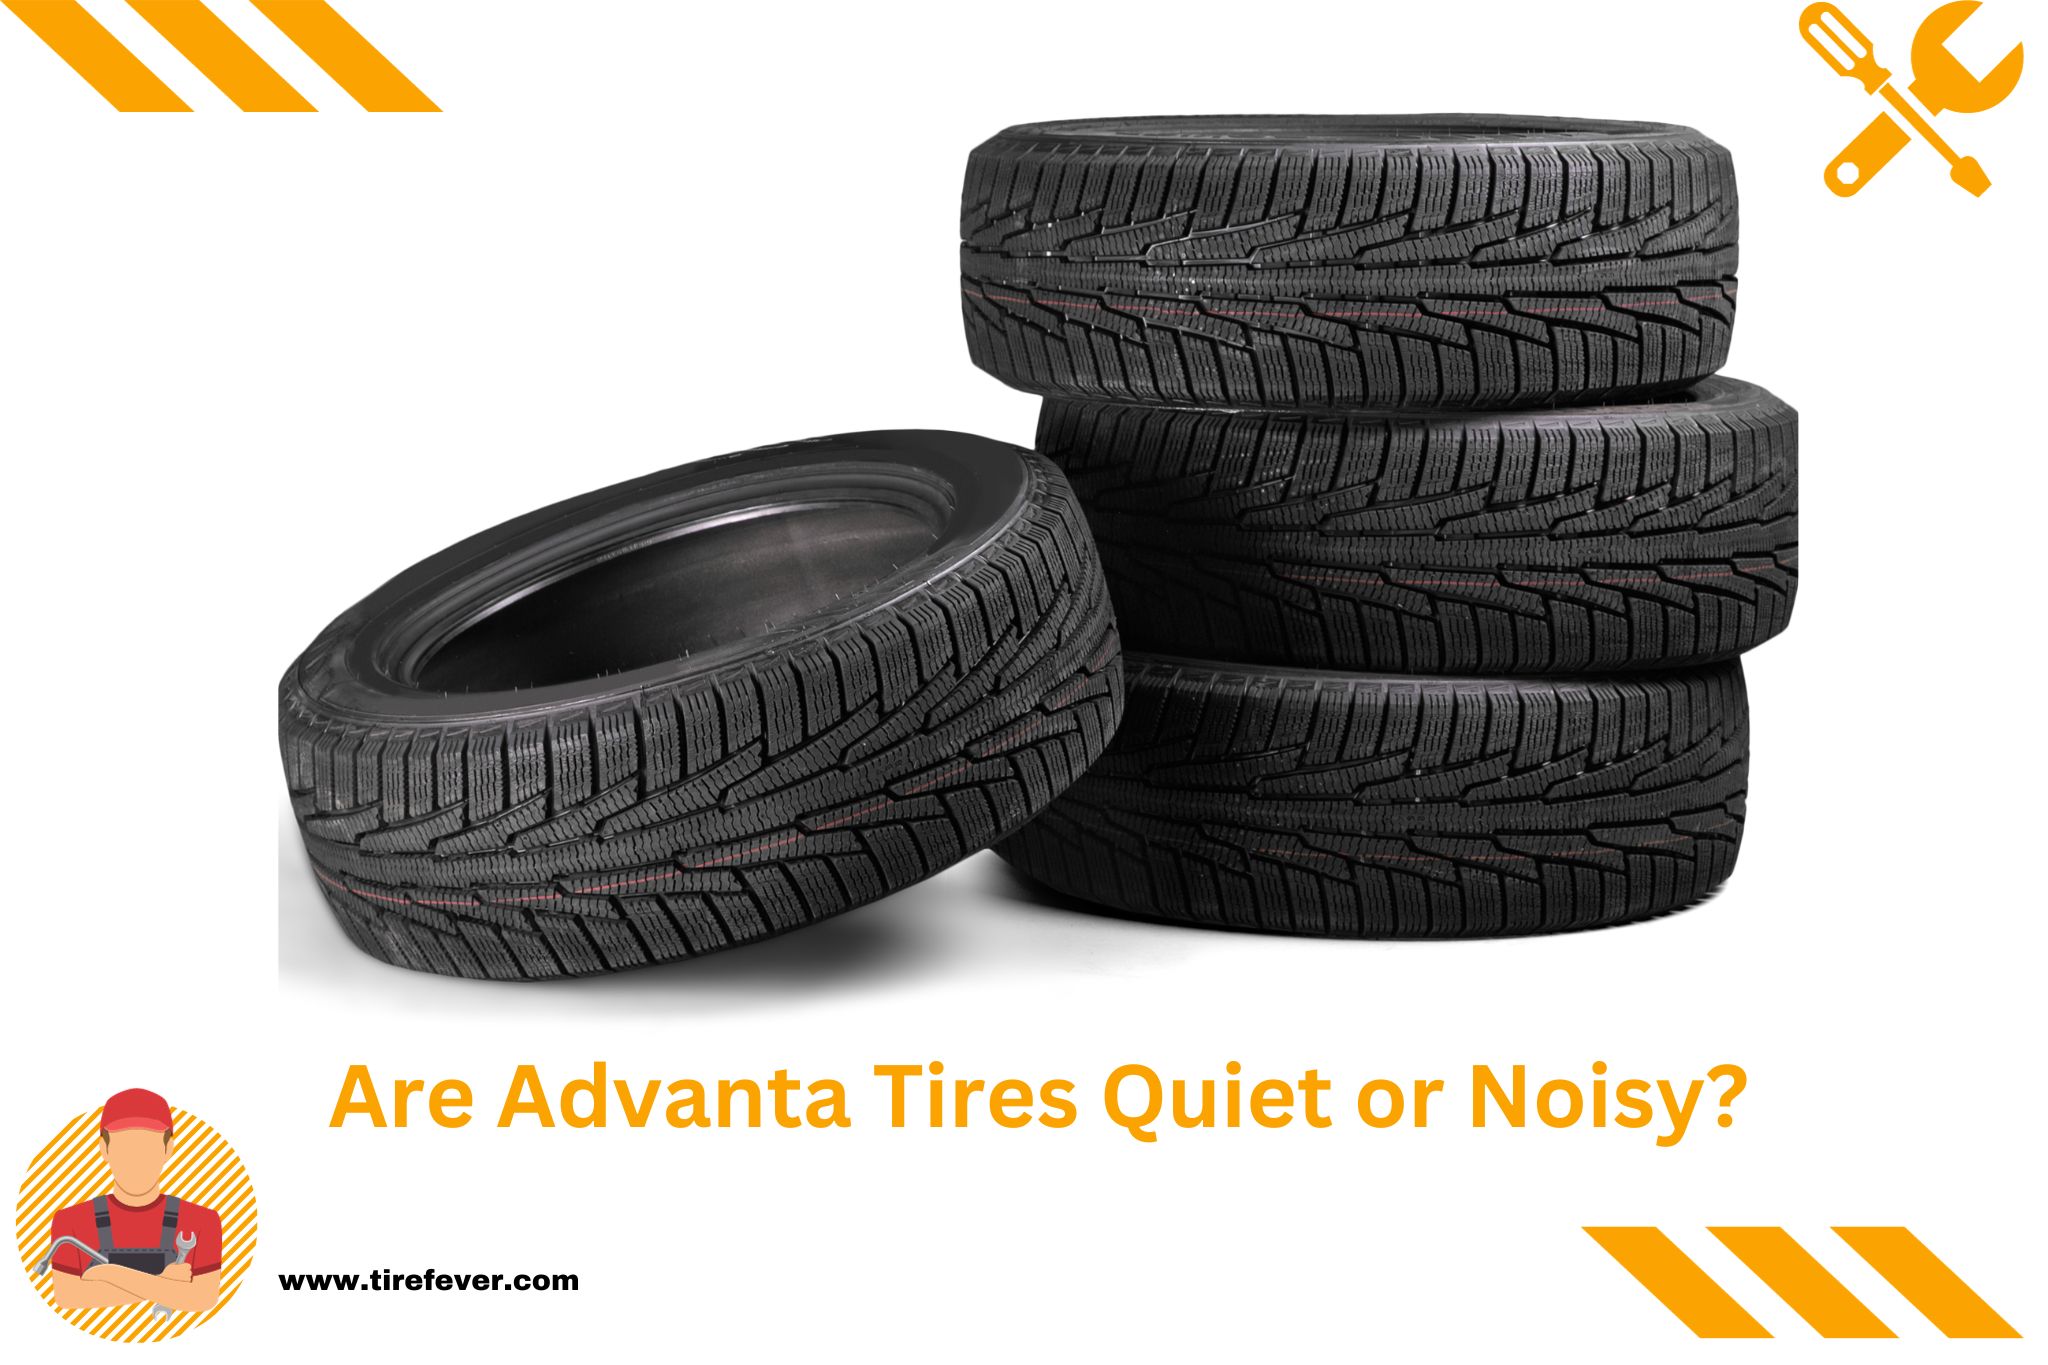 Are Advanta Tires Quiet or Noisy?